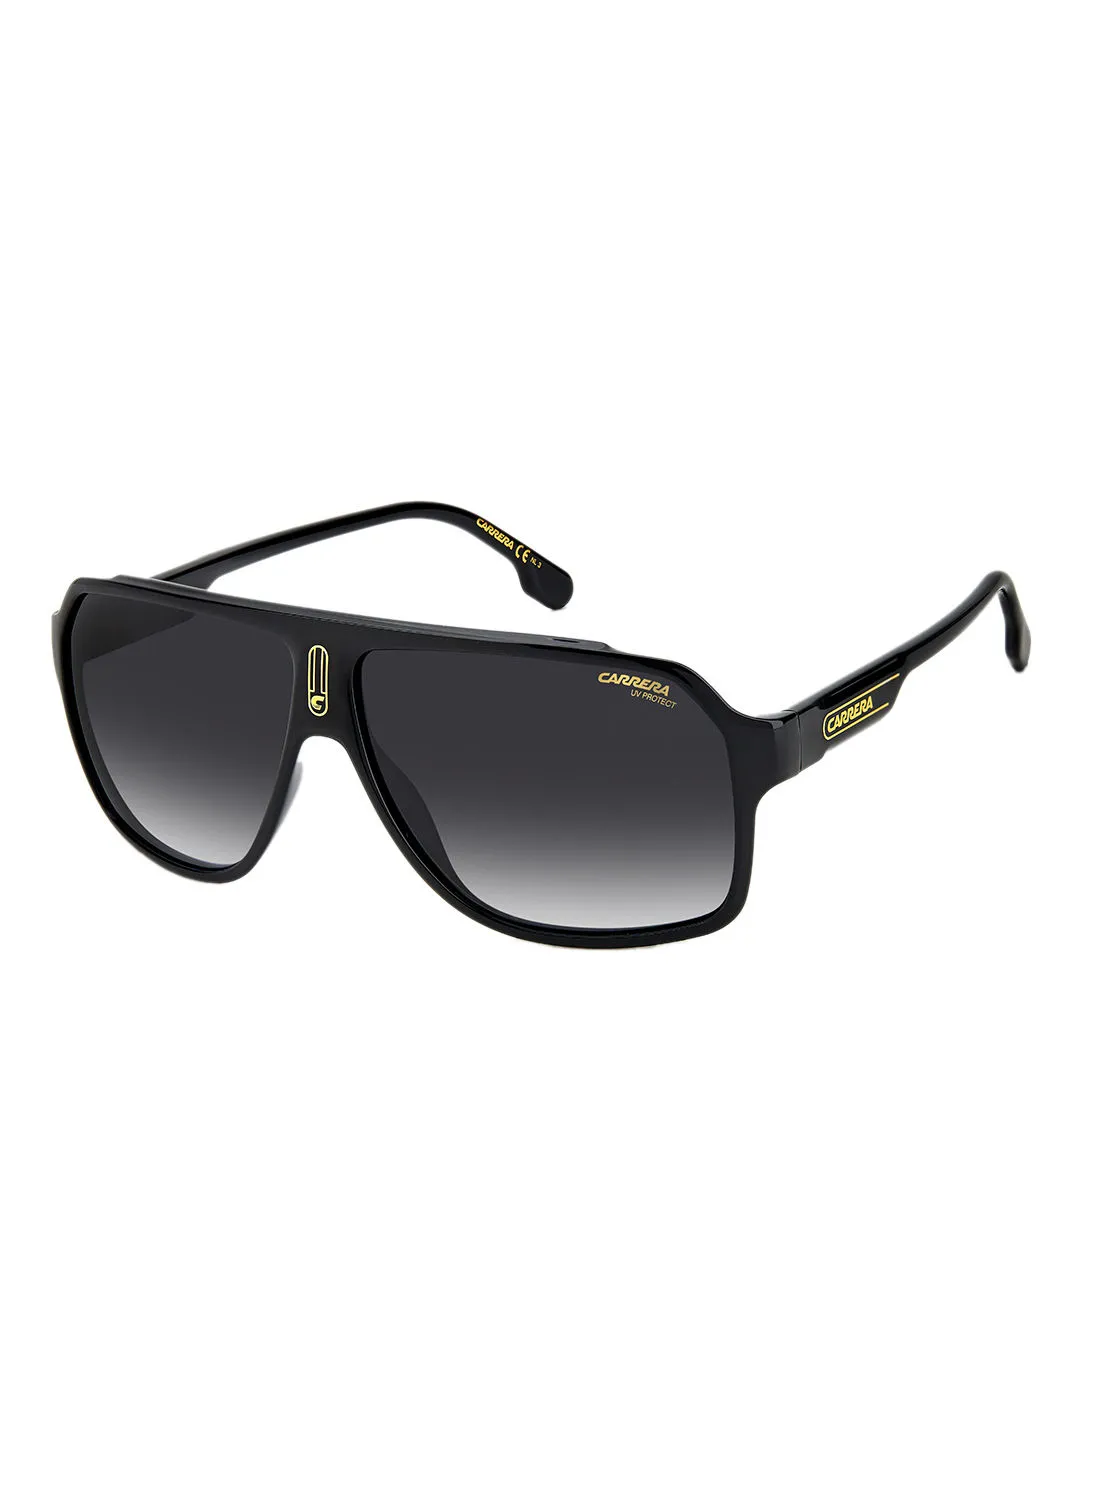 CARRERA UV Protection Rectangular Eyewear Sunglasses CARRERA 1030/S  BLK GOLD 62